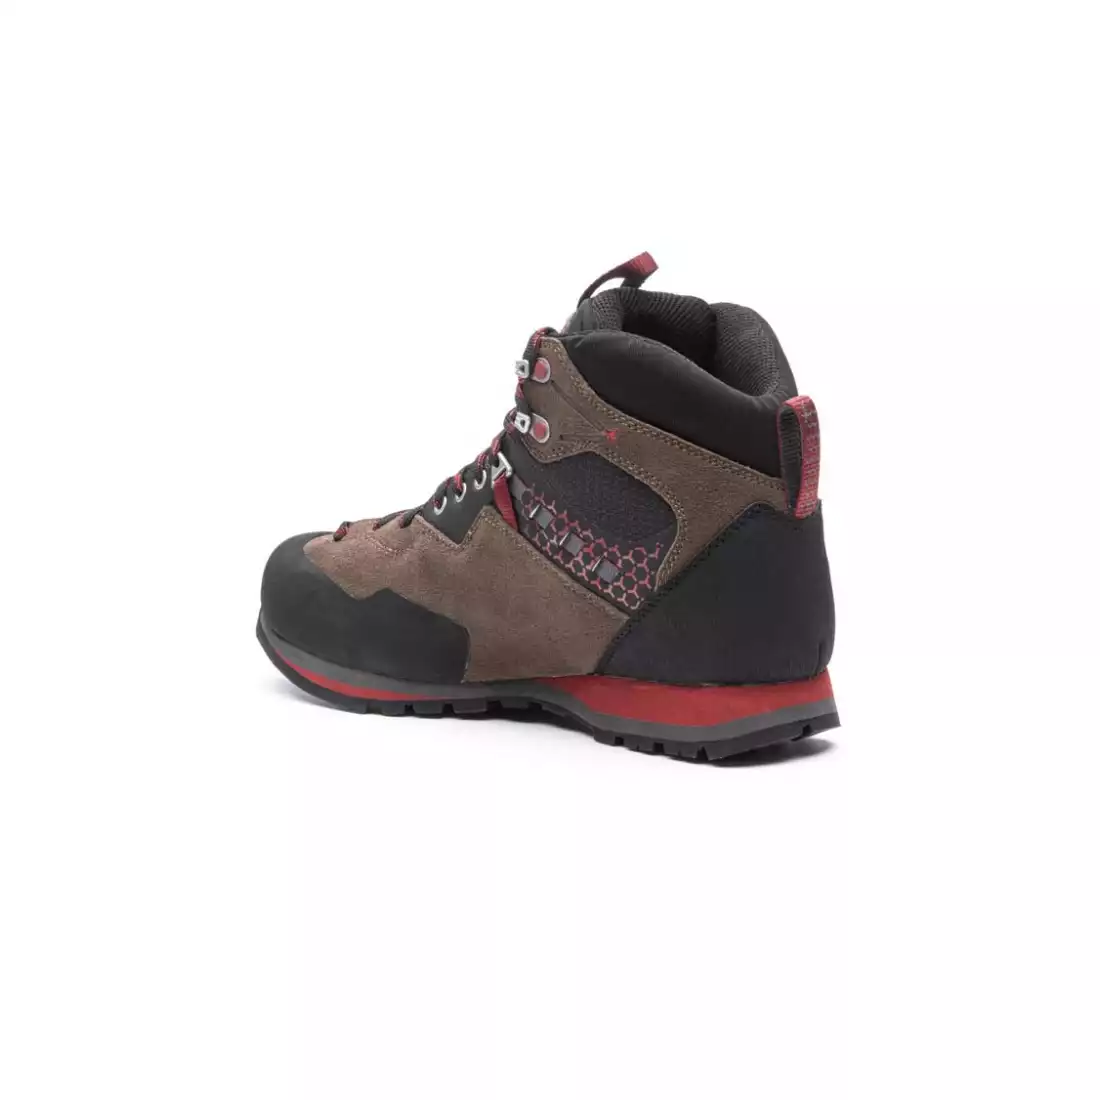 KAYLAND VITRIK MID GTX Approach hiking boots, GORE-TEX, VIBRAM, Brown